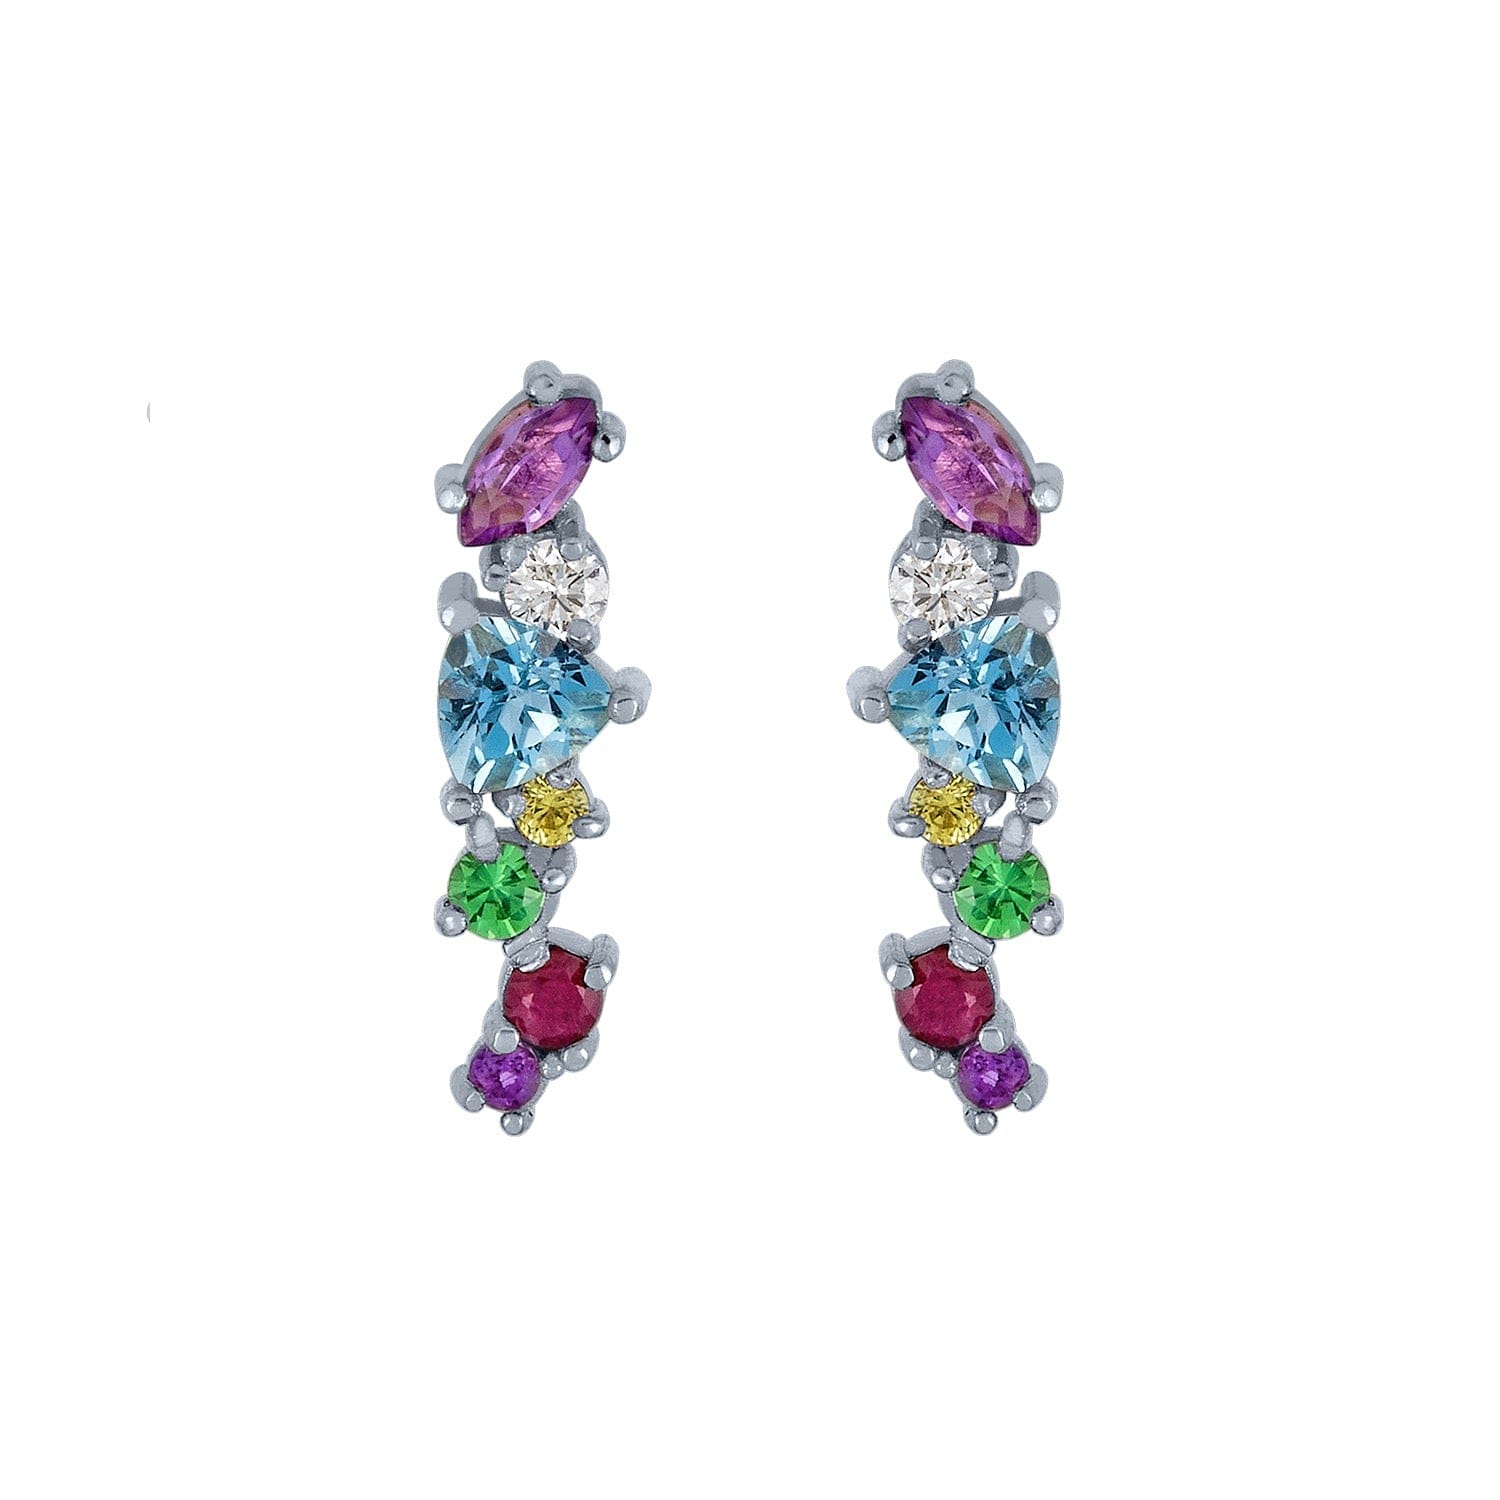 Ad Astra Acrostic Cluster Earrings |  Earrings - Common Era Jewelry